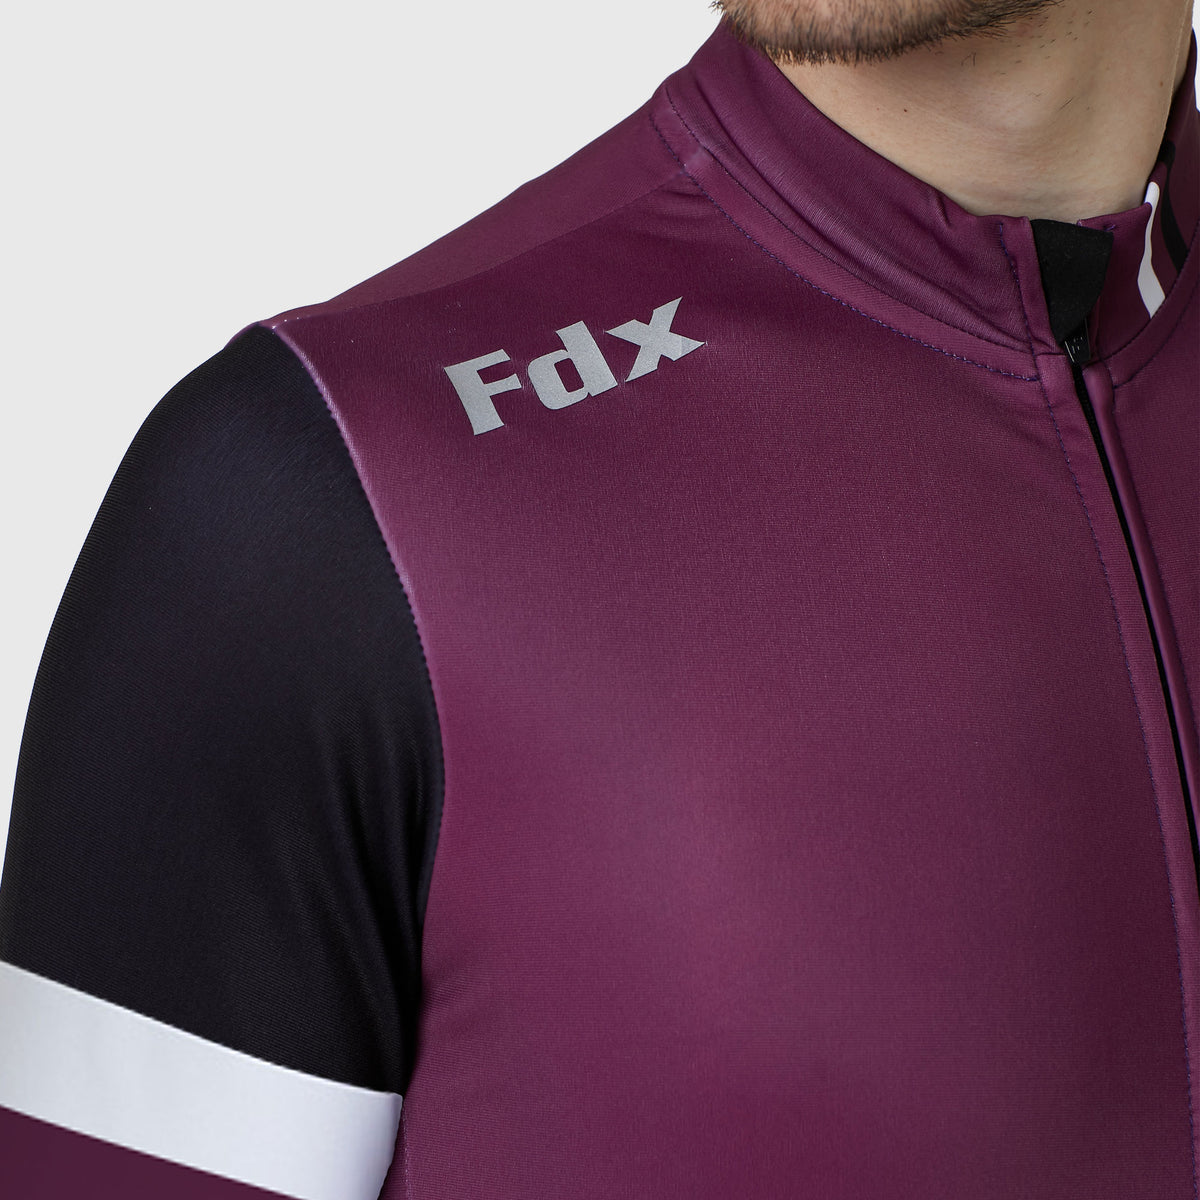 Fdx Men's Set Limited Edition Thermal Roubaix Long Sleeve Cycling Jersey & Bib Tights - Purple, M / Purple